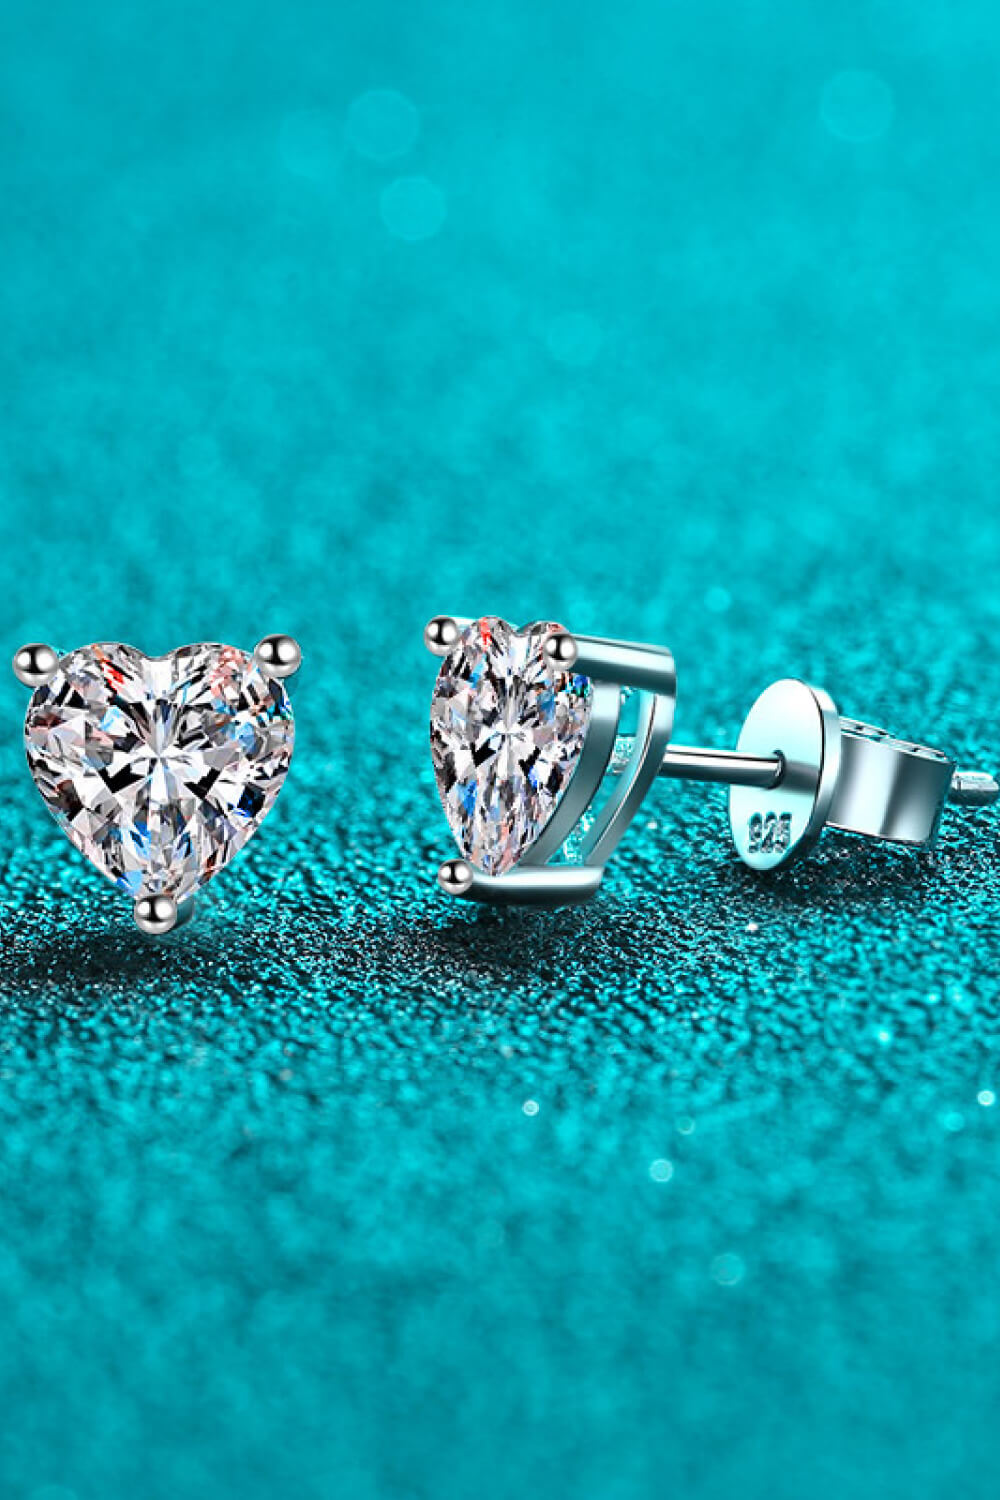 2 Ct Heart Cut Diamond Solitaire Drop & Dangle Earrings 14k Rose Gold  Finish | eBay